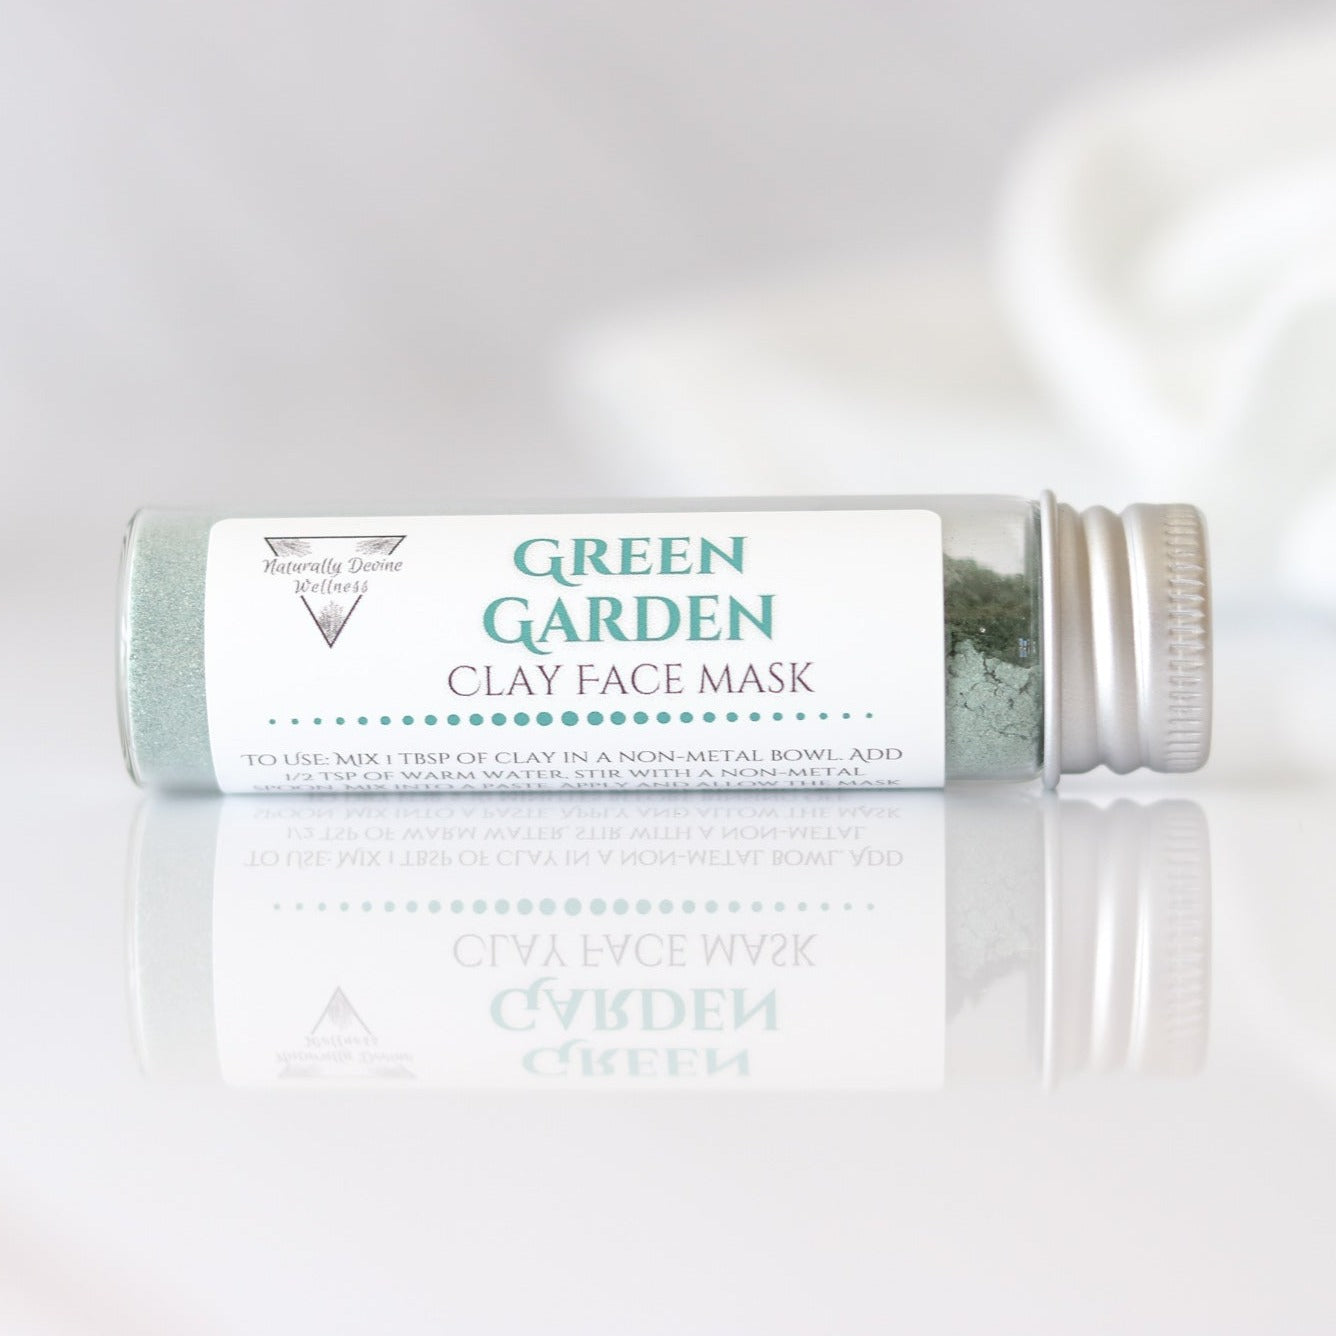 Green Garden Clay Face Mask - Naturally Devine Wellness